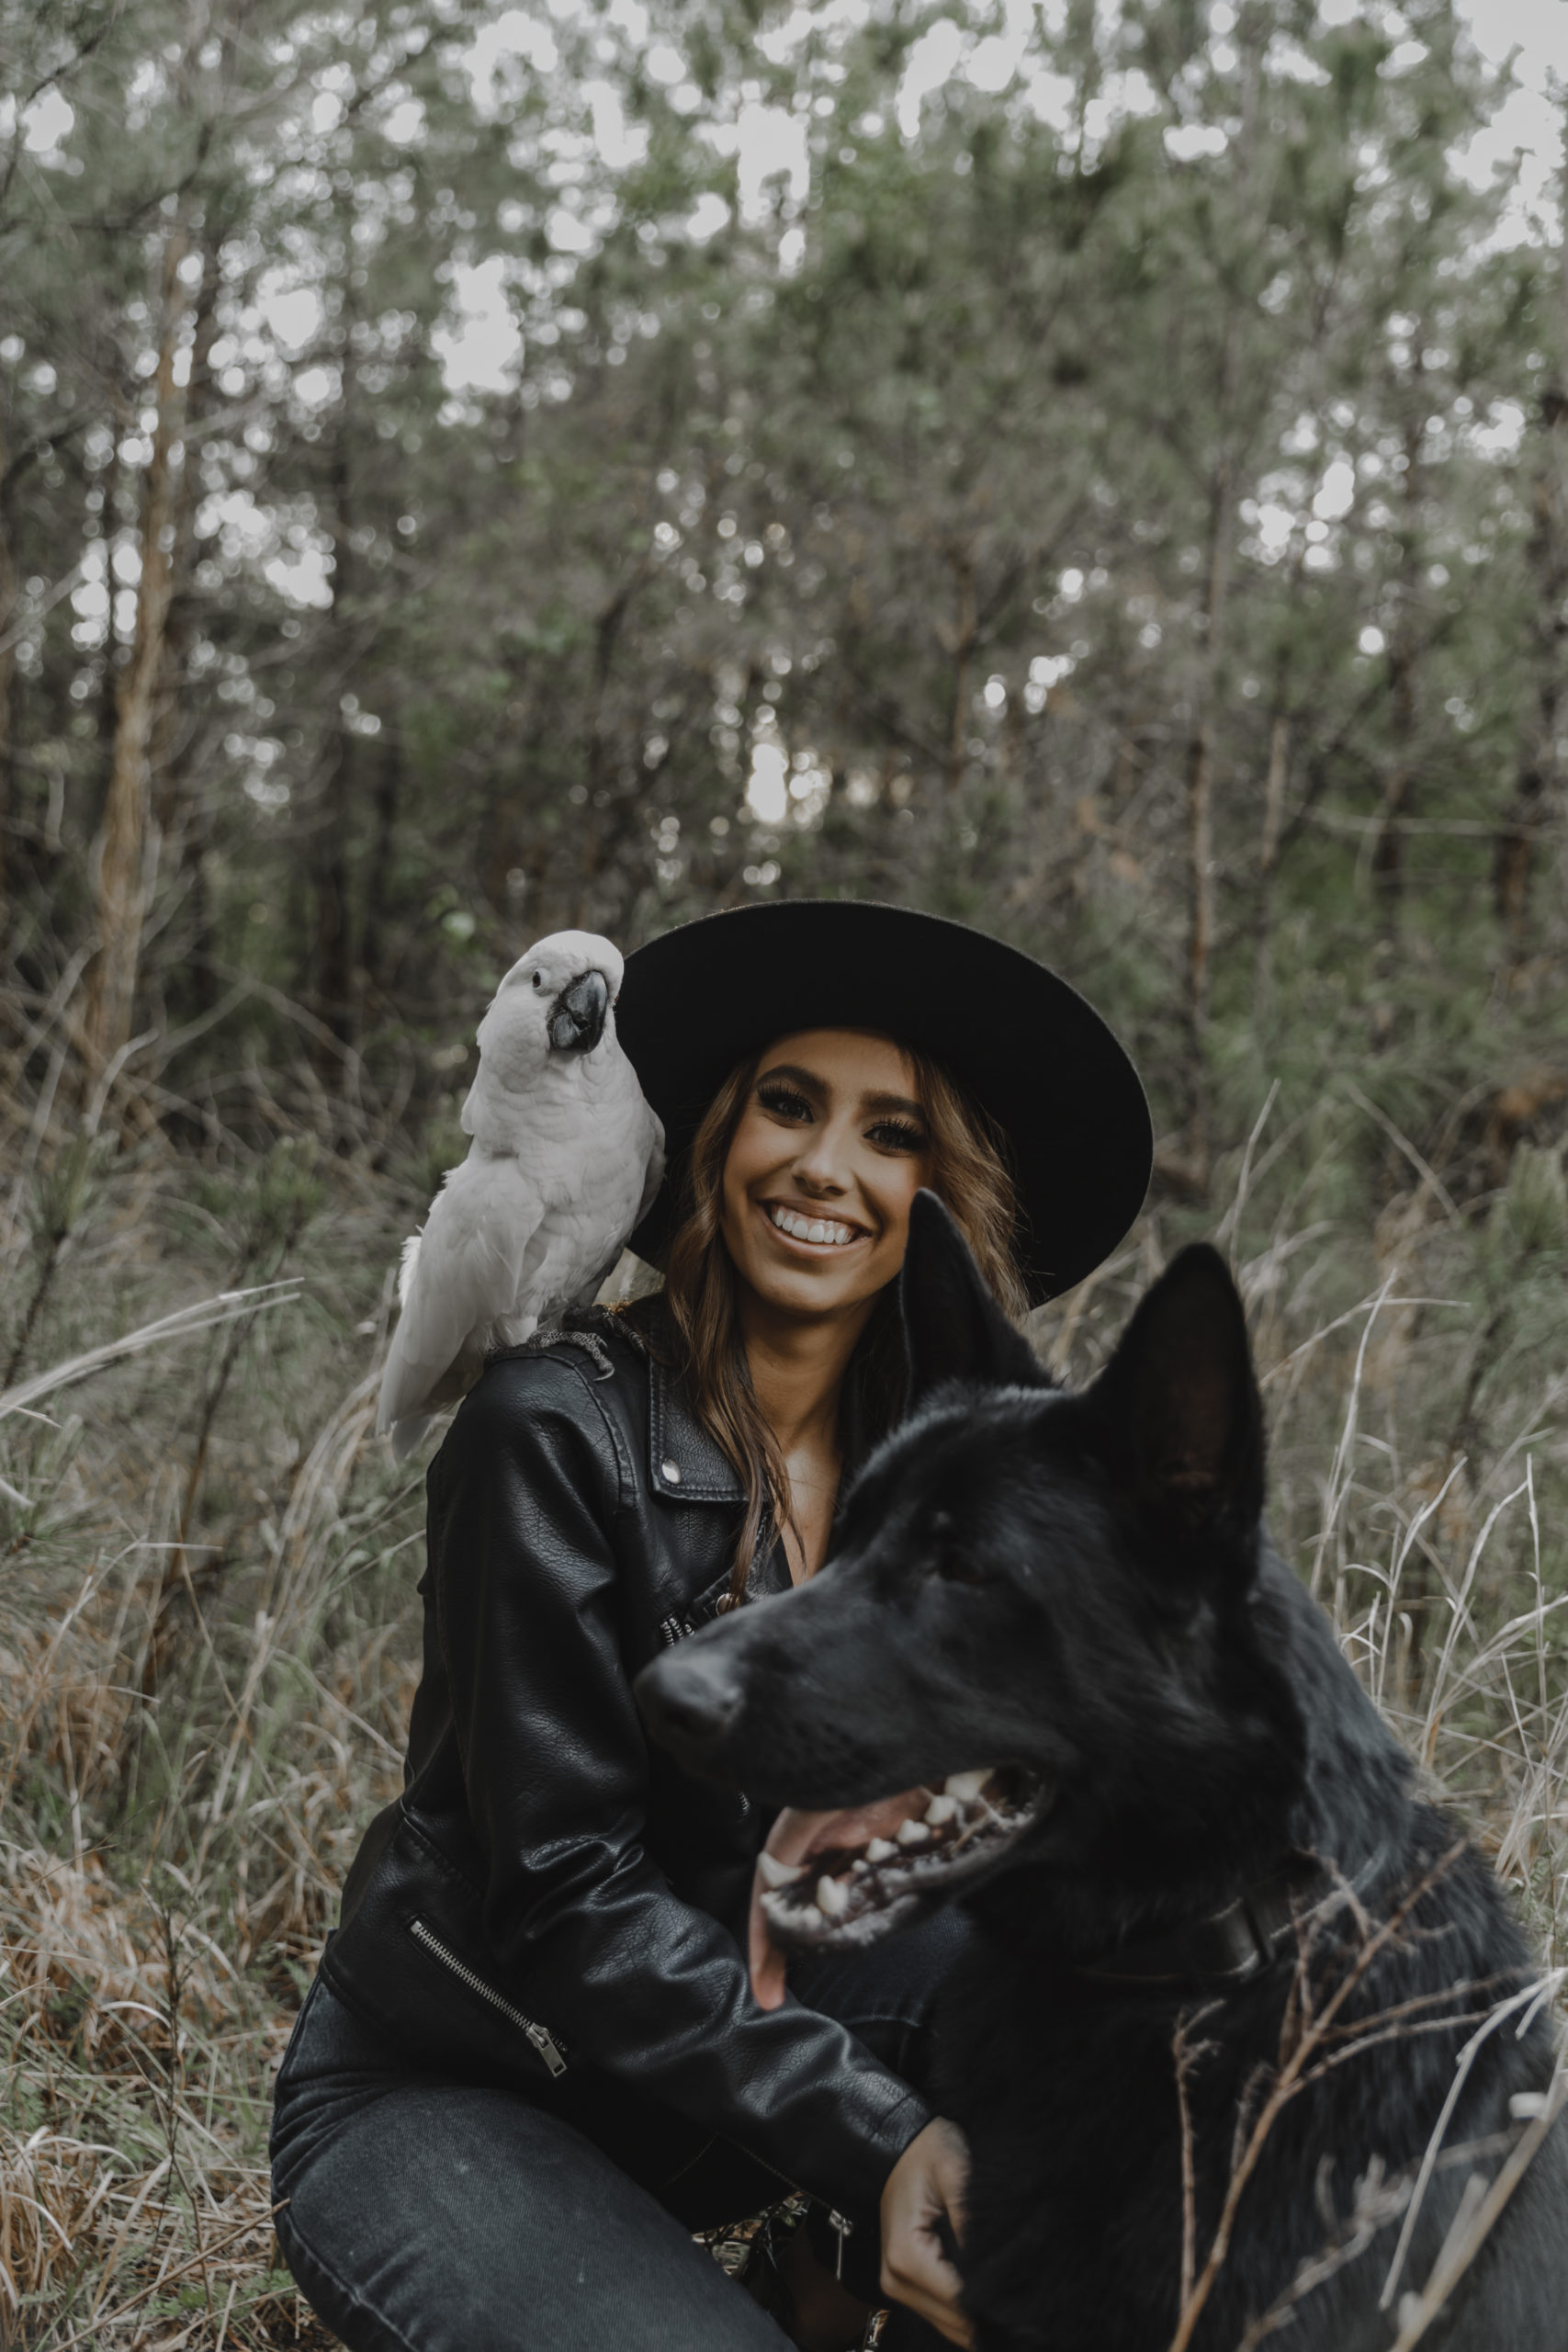 katlyn with her dog and bird, bane and besha